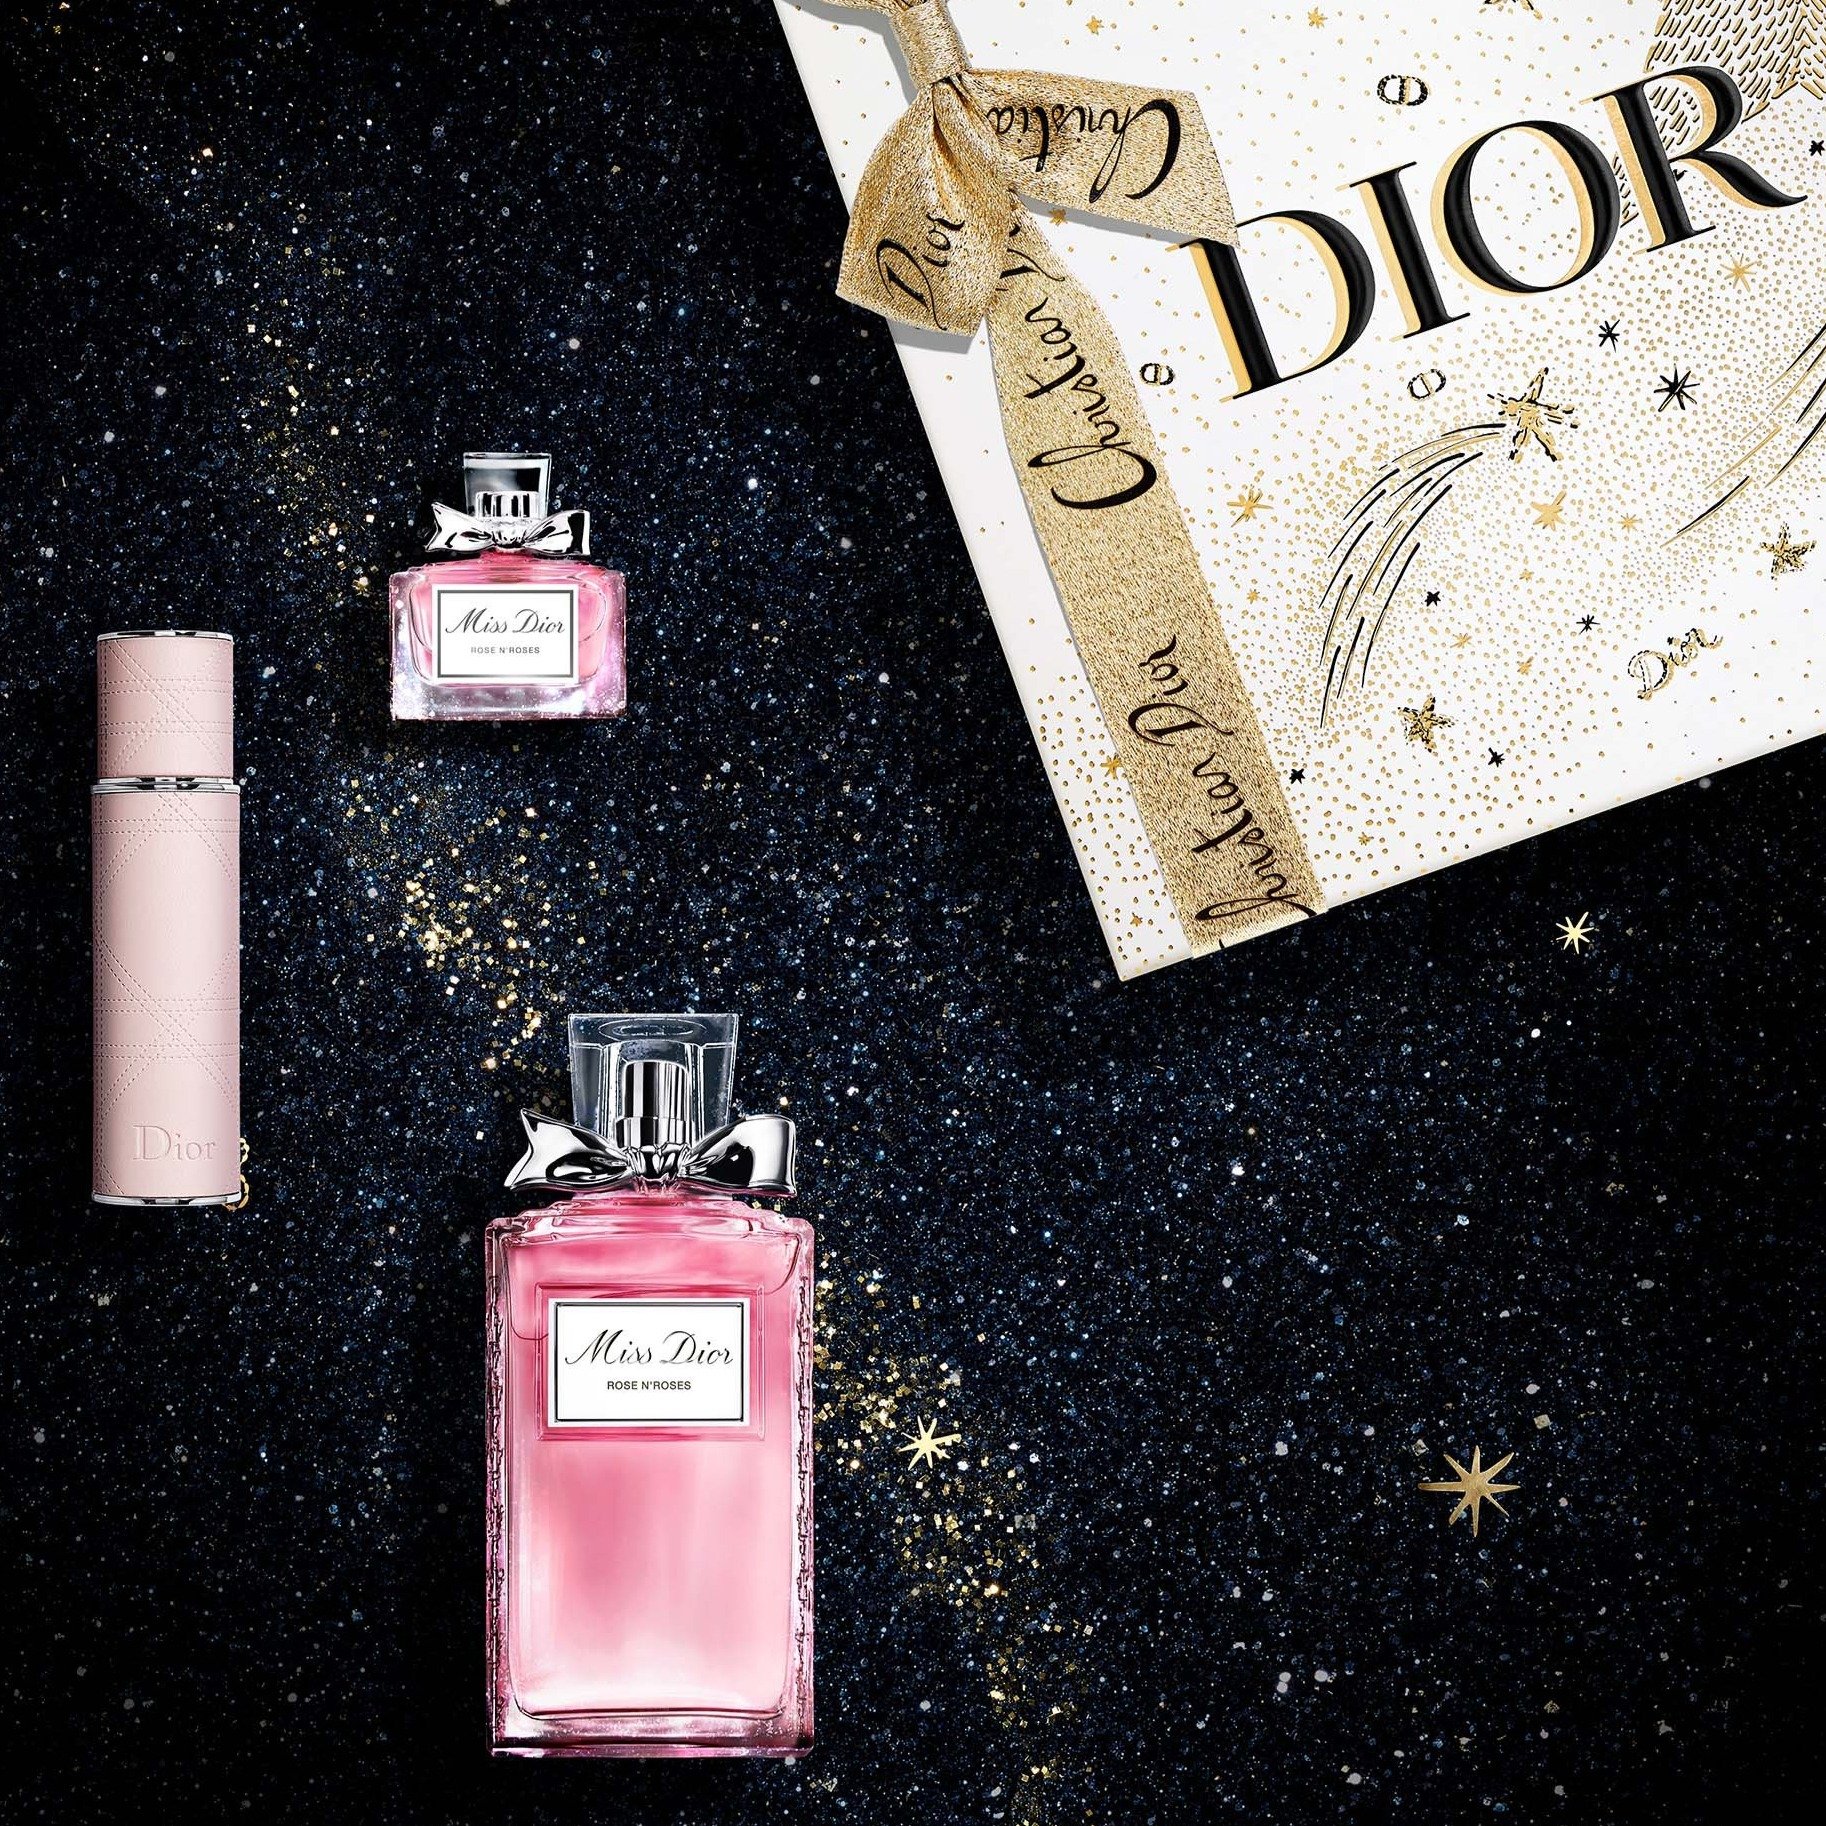 dior travel set perfume